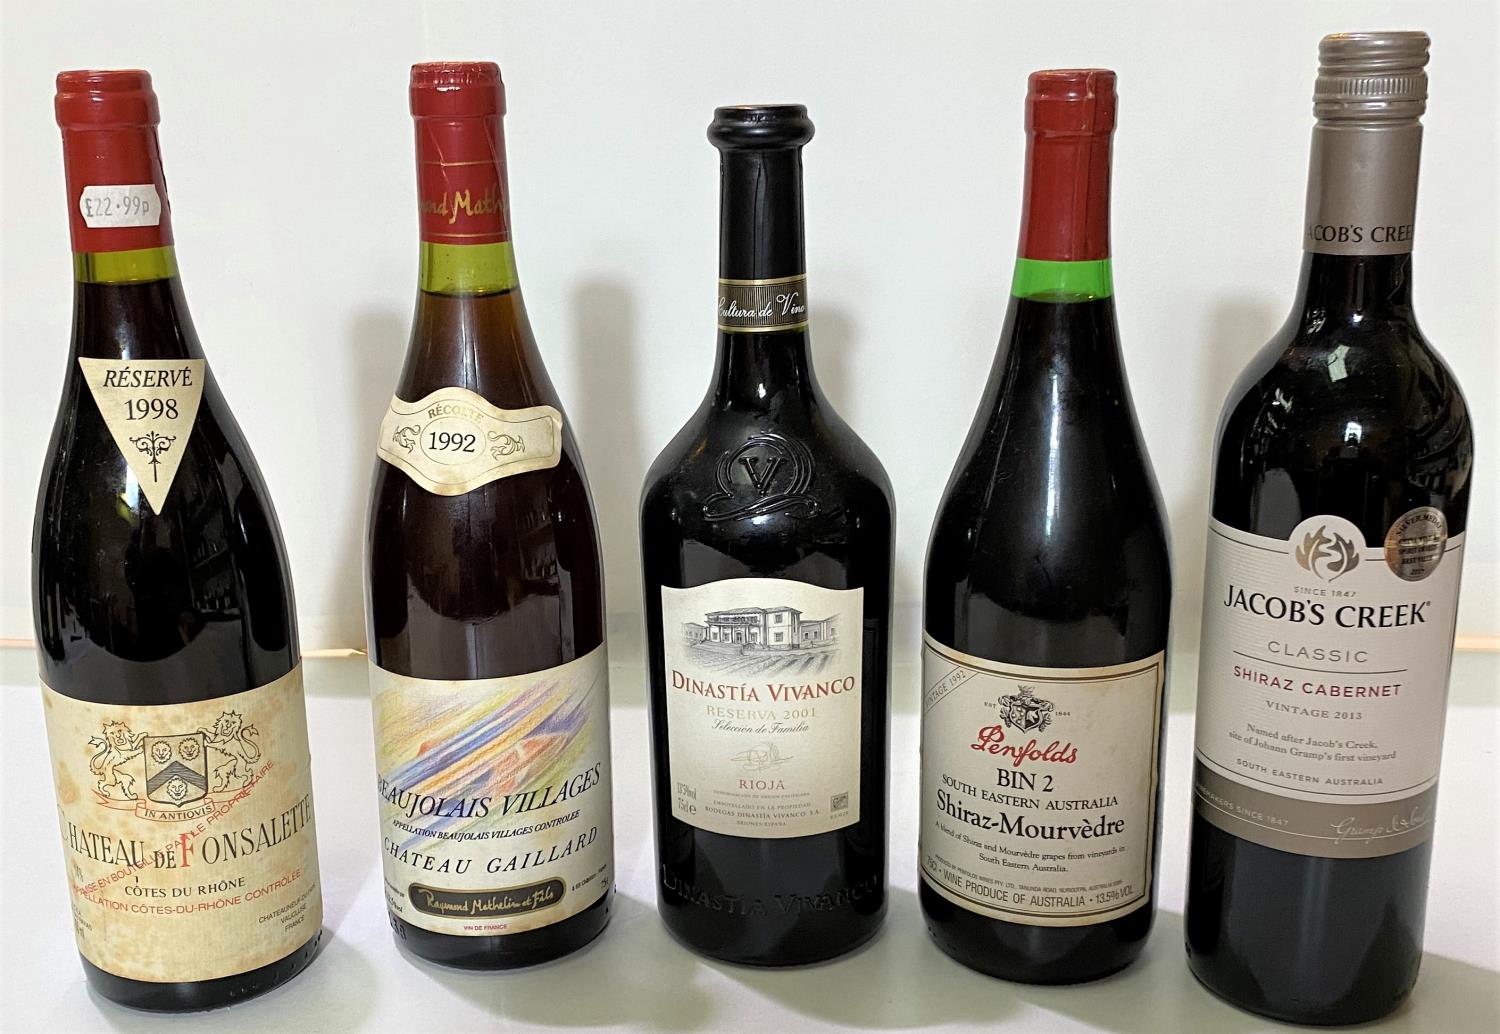 A 70cl bottle of 1998 Chateau de Fonsalette Cotes du Rhone and 4 other bottles of red wine